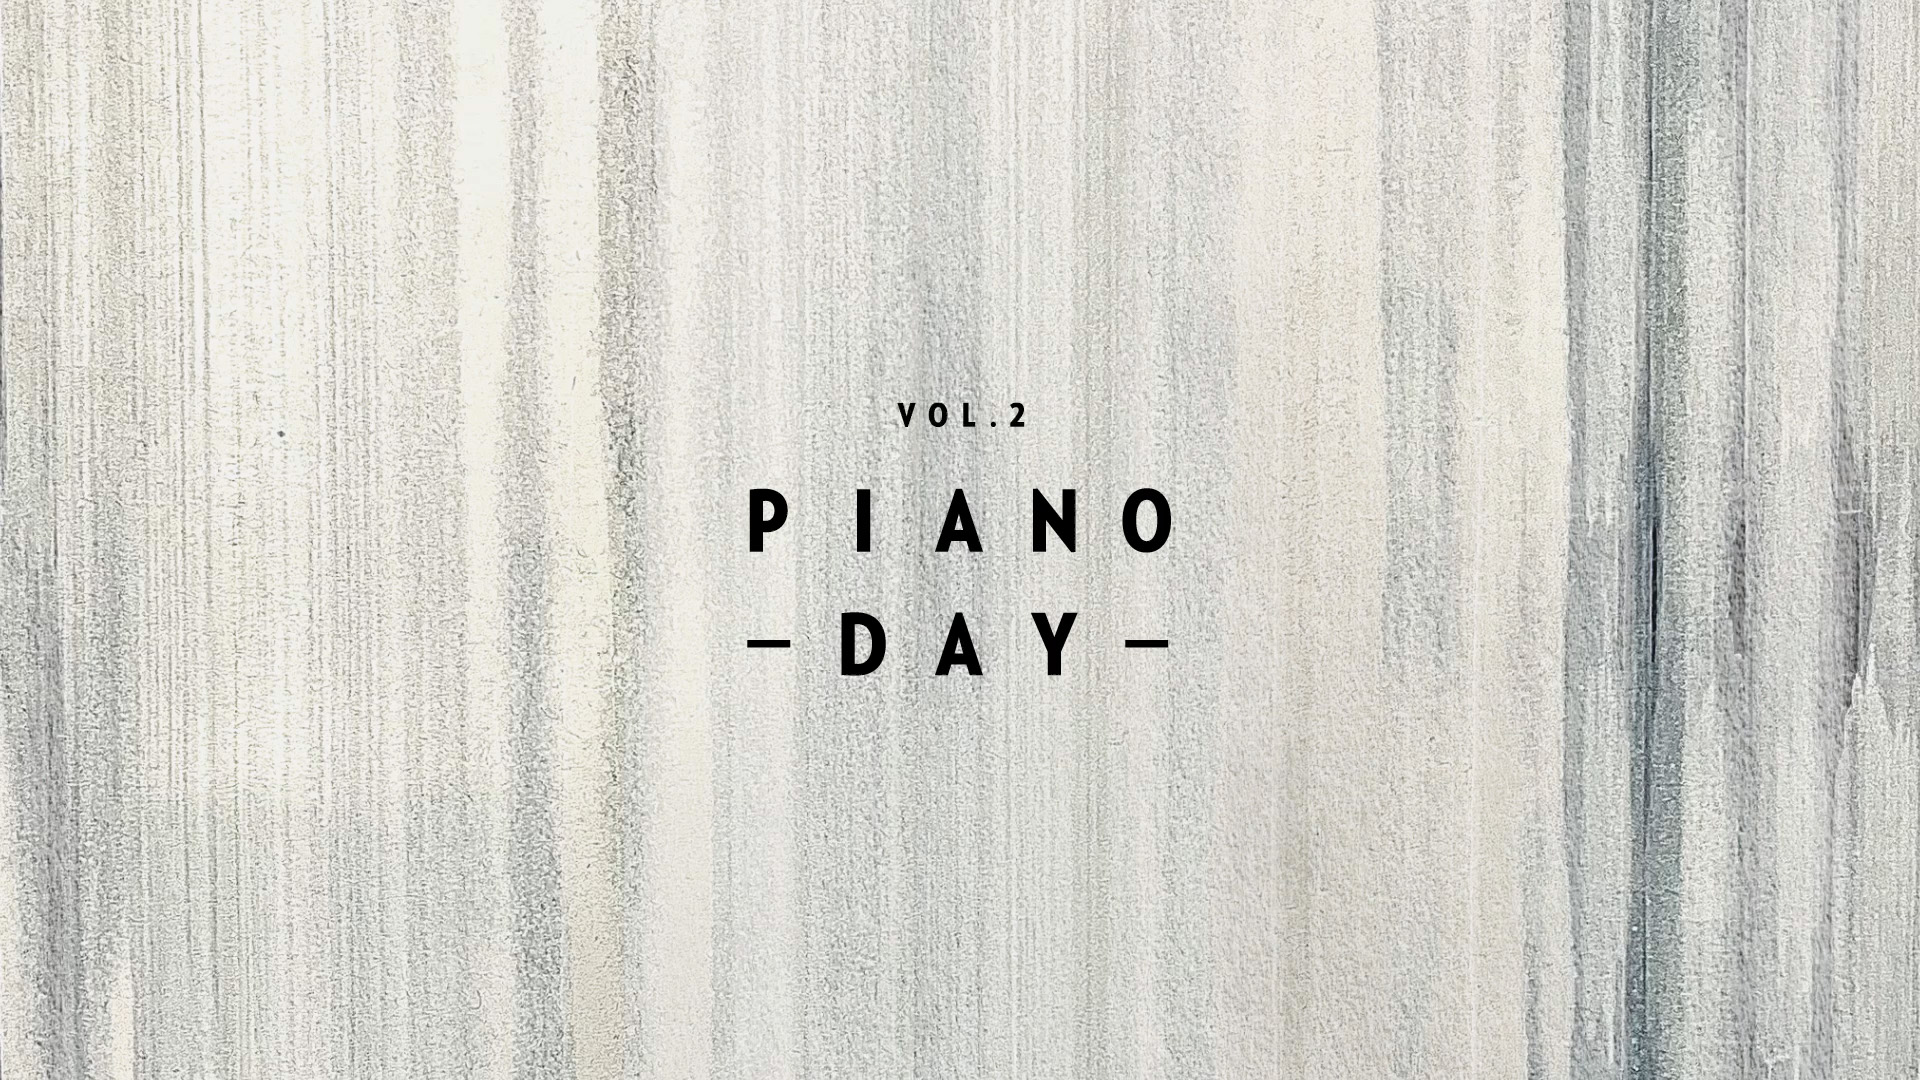 THE WORLD OF PIANOS Listening Calendar - 30 days of Piano Music